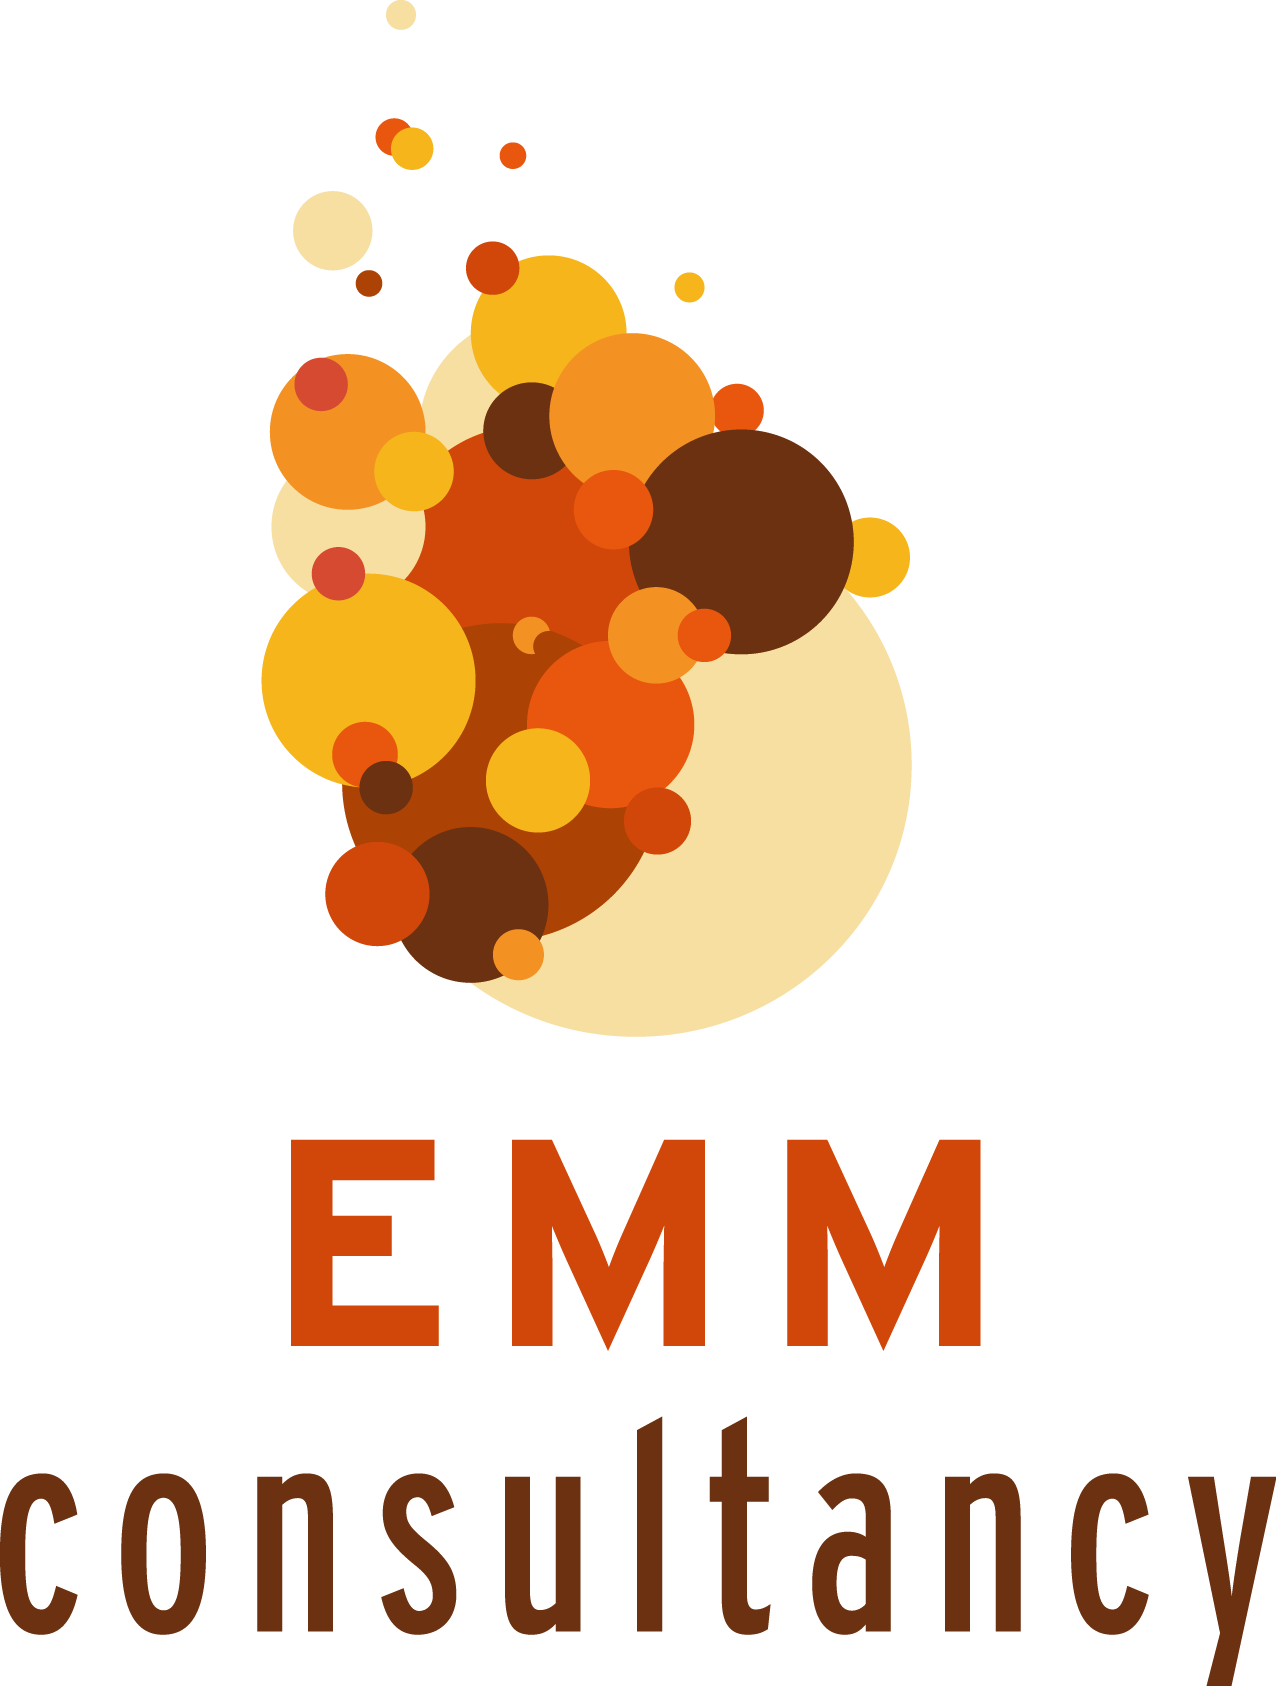 EMM Consultancy